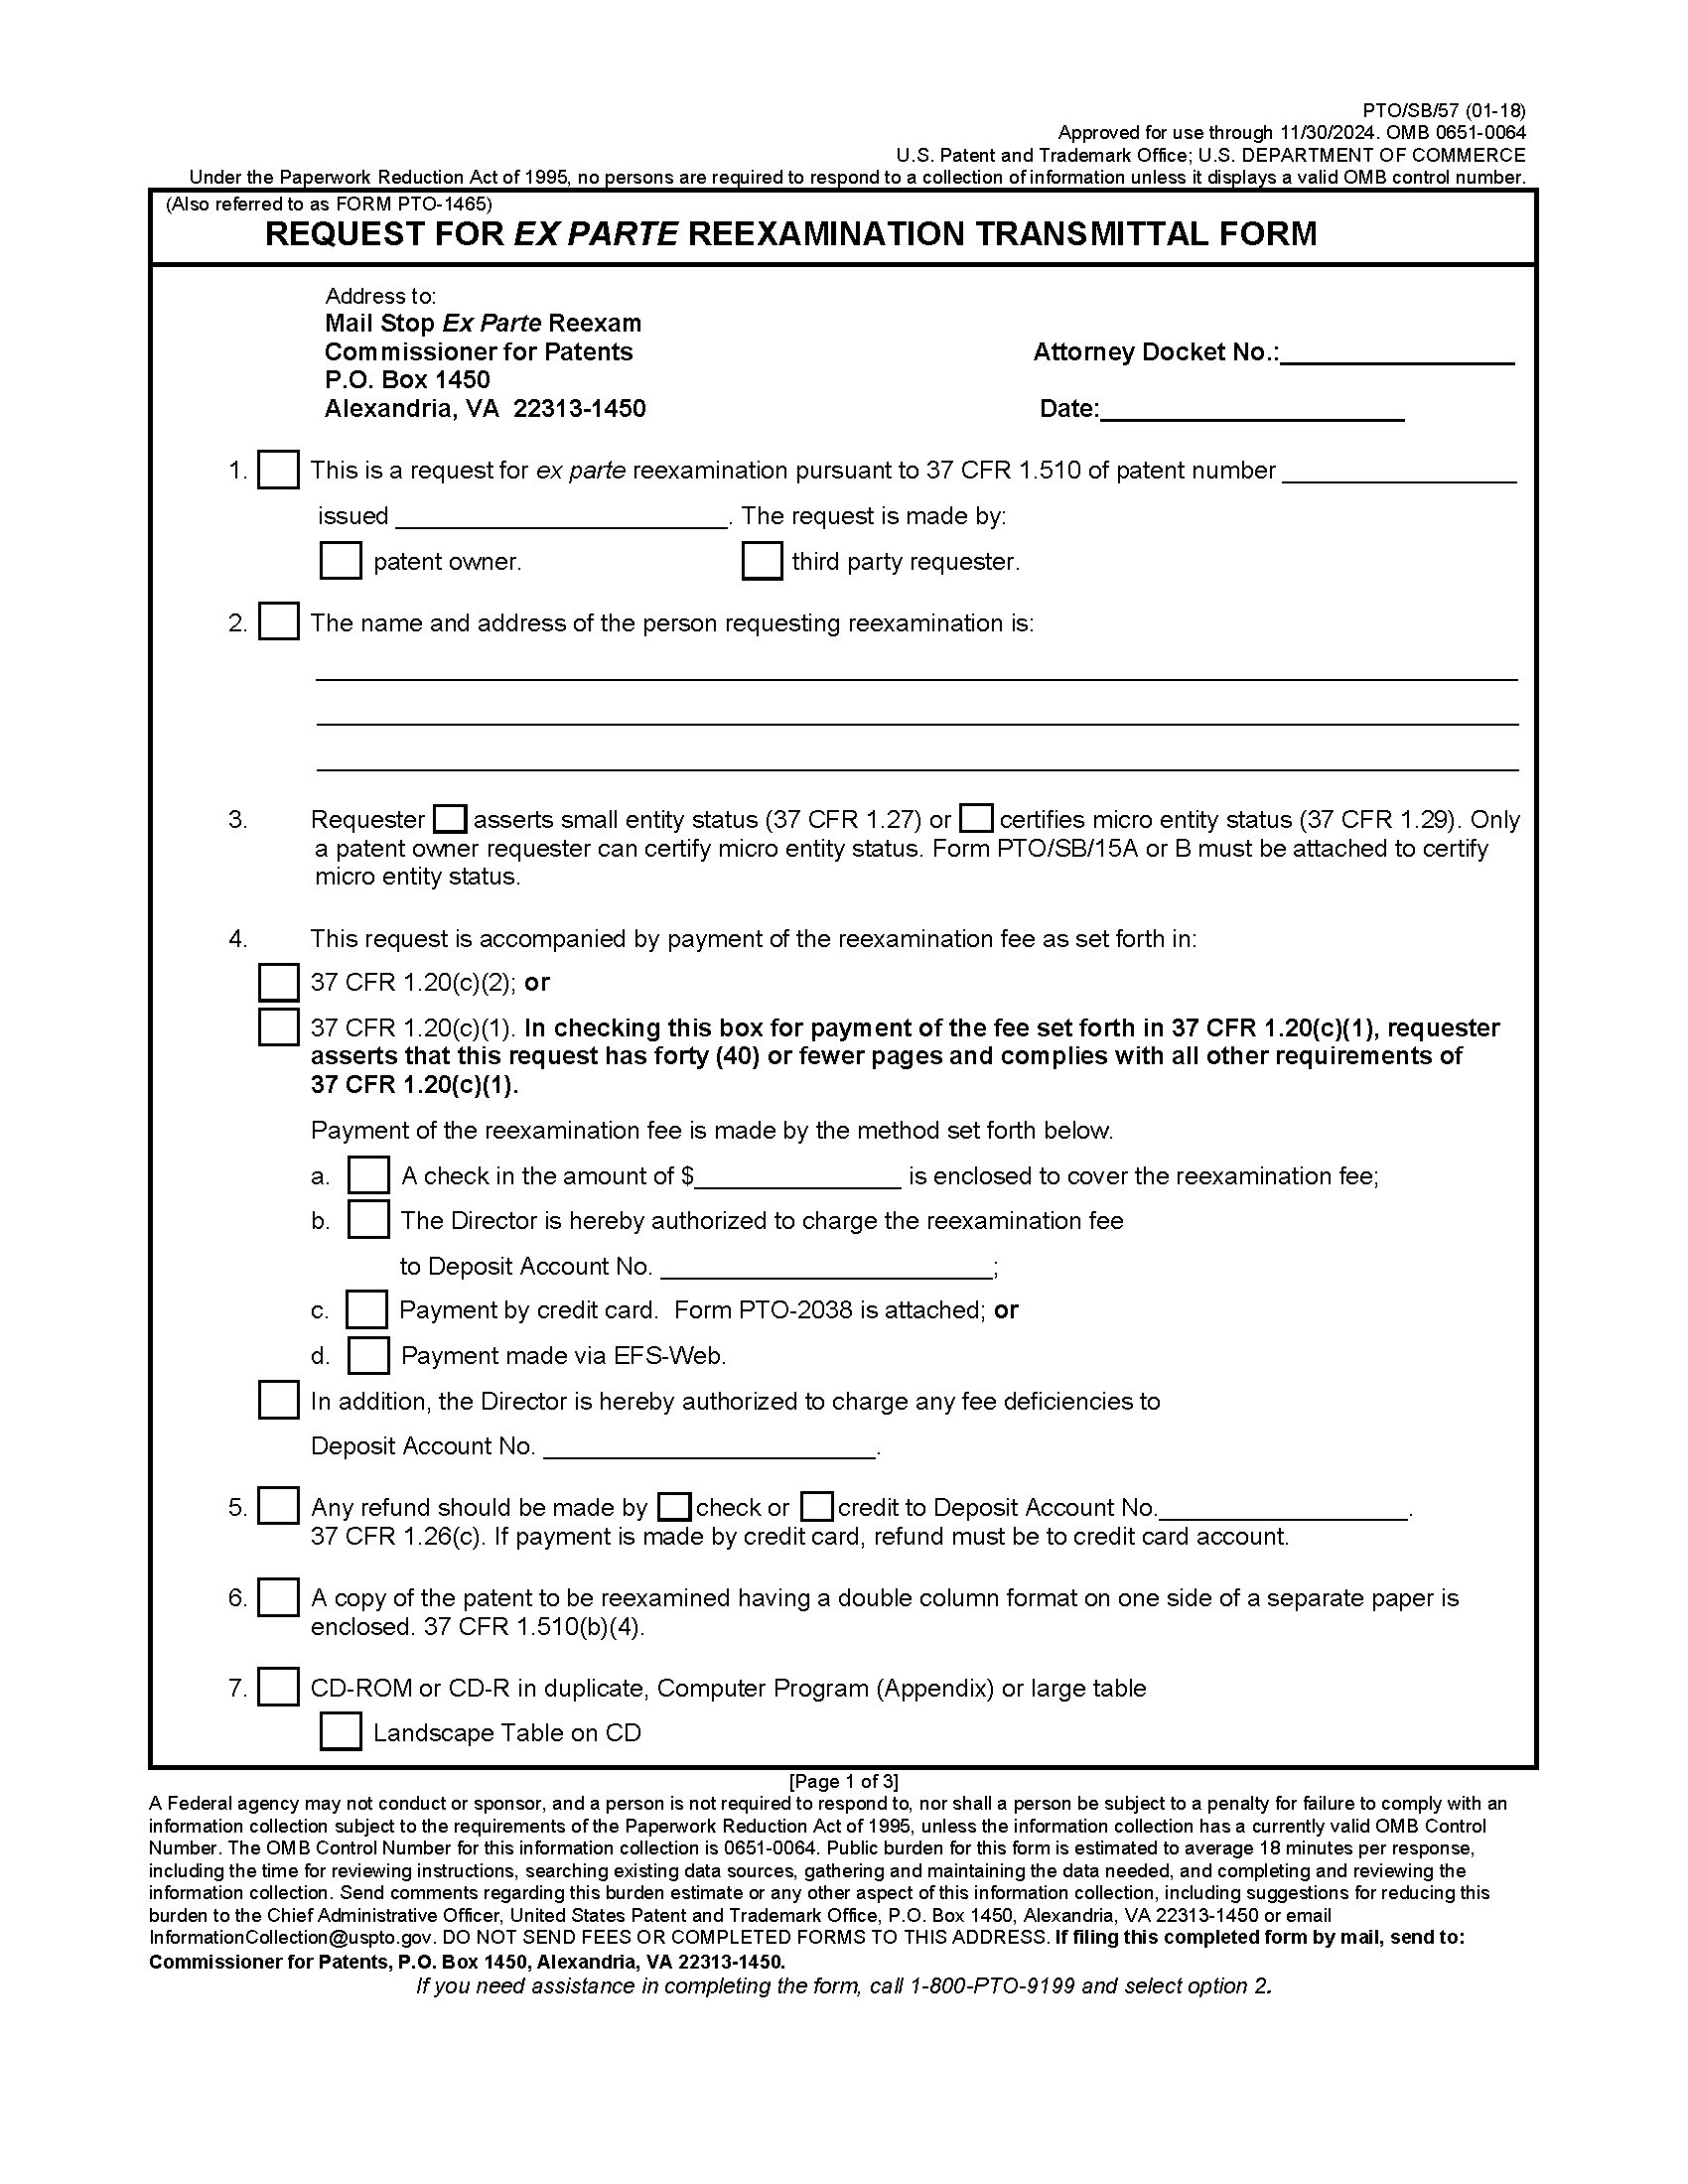 Form PTO/SB/57 - Request for Ex Parte Reexamination Transmittal Form